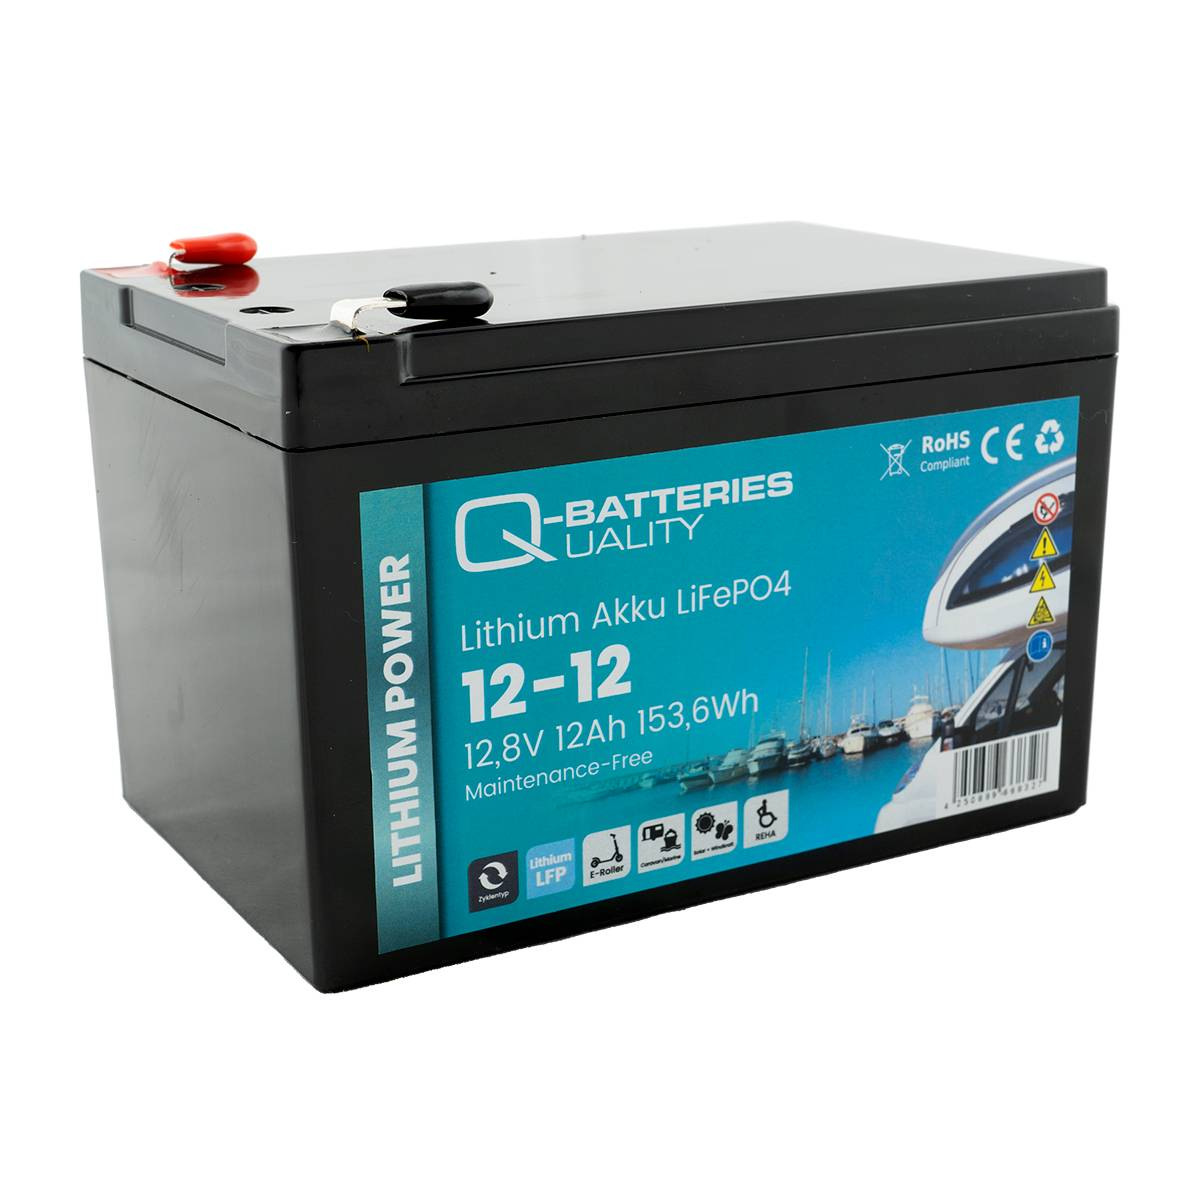 Q-Batteries Lithium Akku 12-12 12,8V 12Ah 153,6Wh LiFePO4 Lithium-Eisenphosphat, Versorgungsbatterie, Caravan, Batterien für